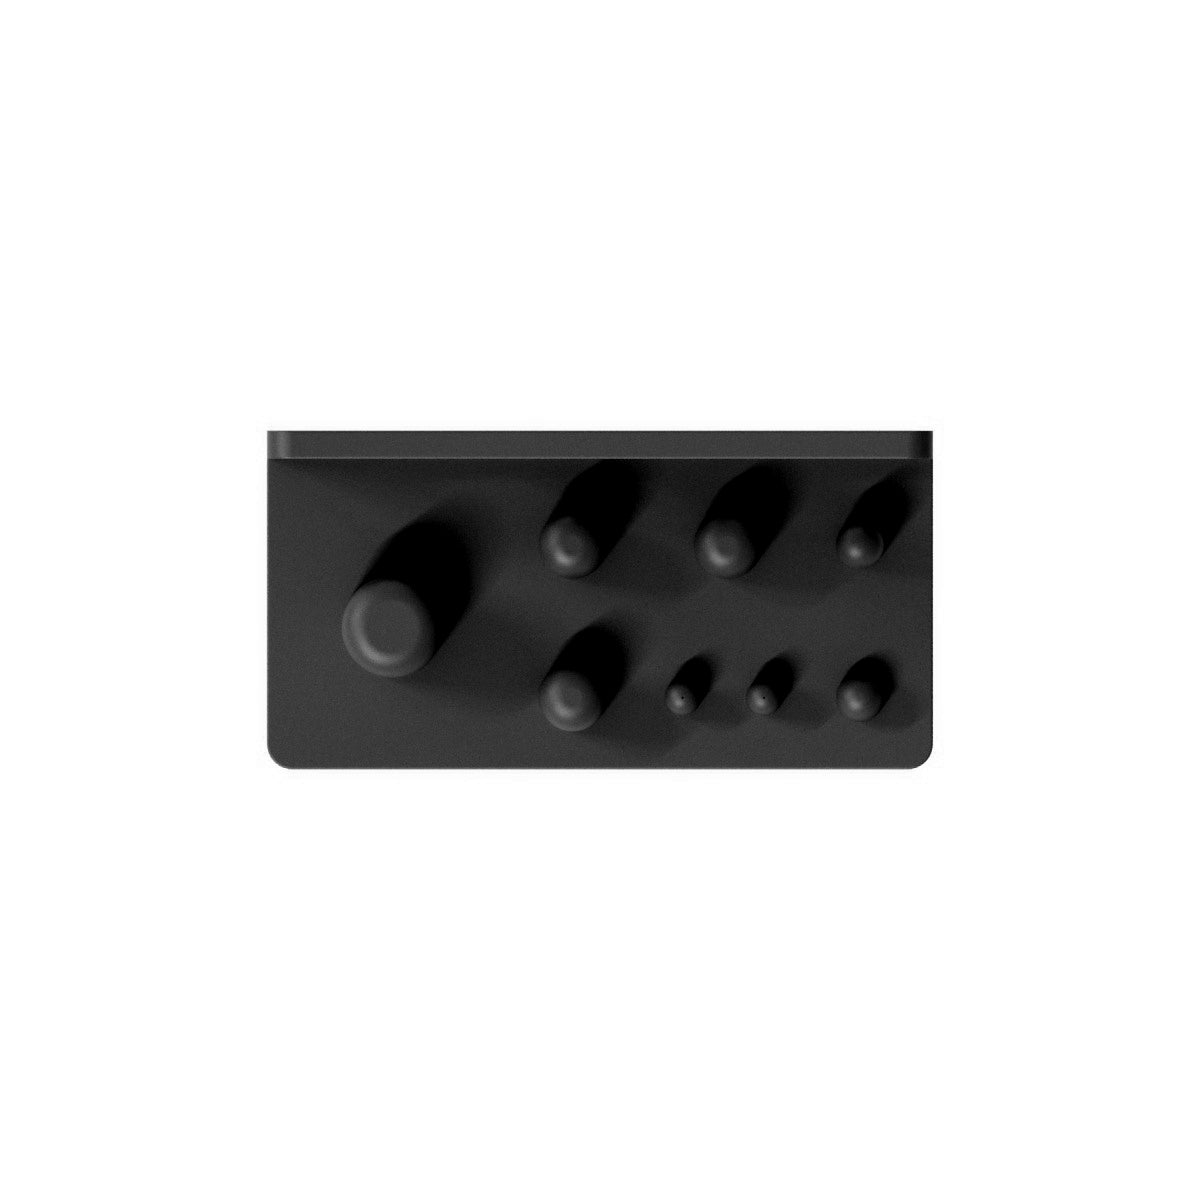 Wall Mount for 8pcs Adapter Socket Set I WM074